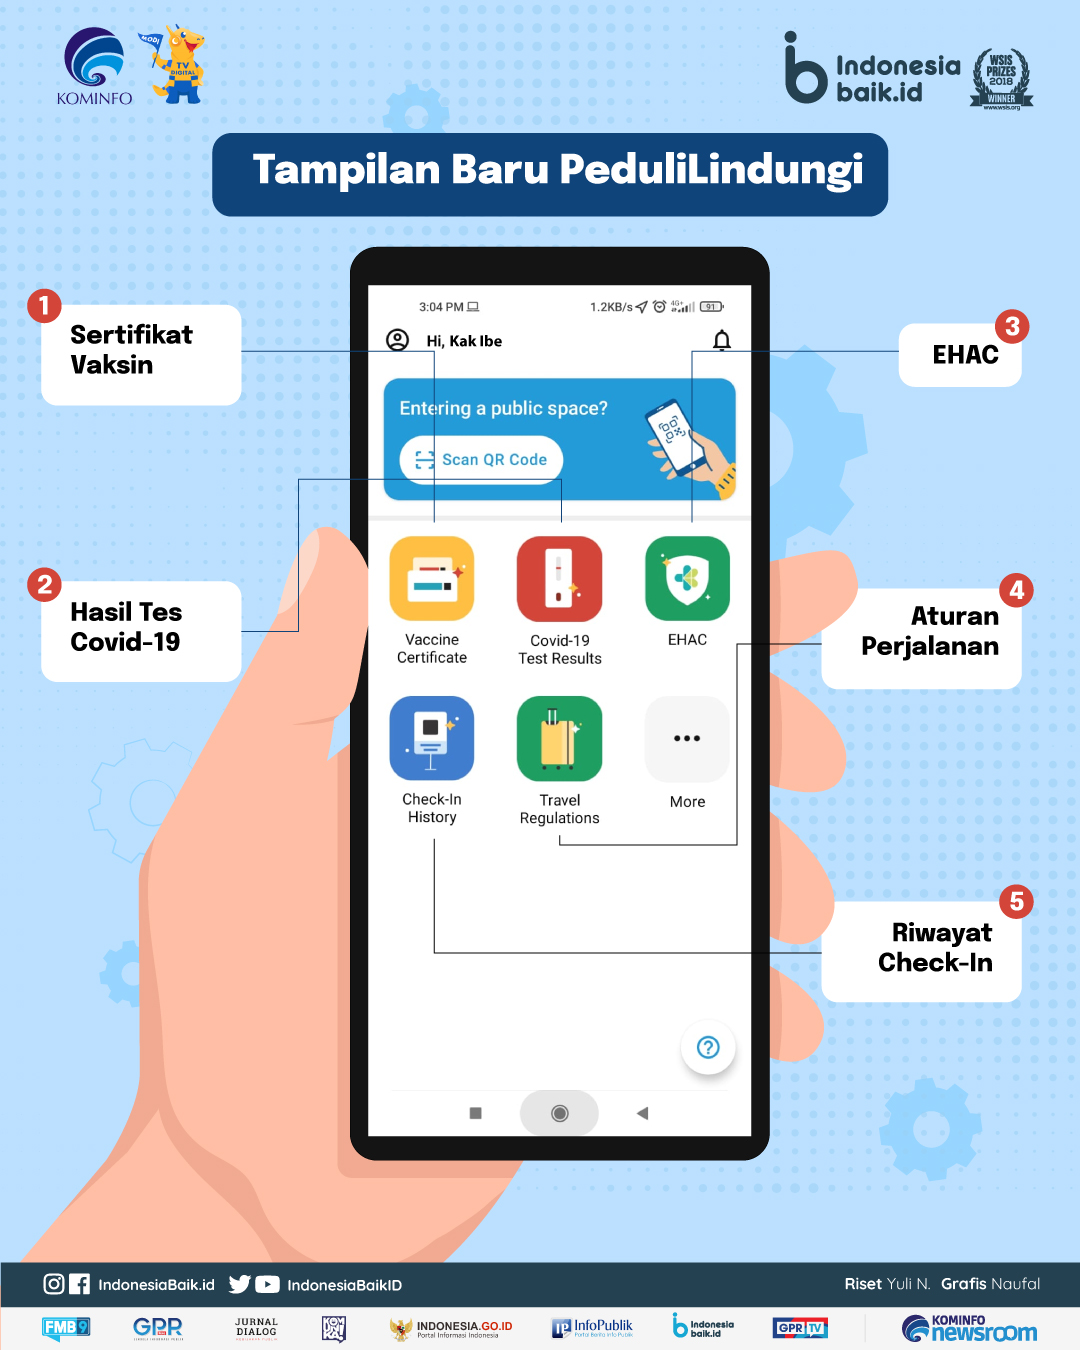 Tampilan Baru Aplikasi PeduliLindungi | Indonesia Baik